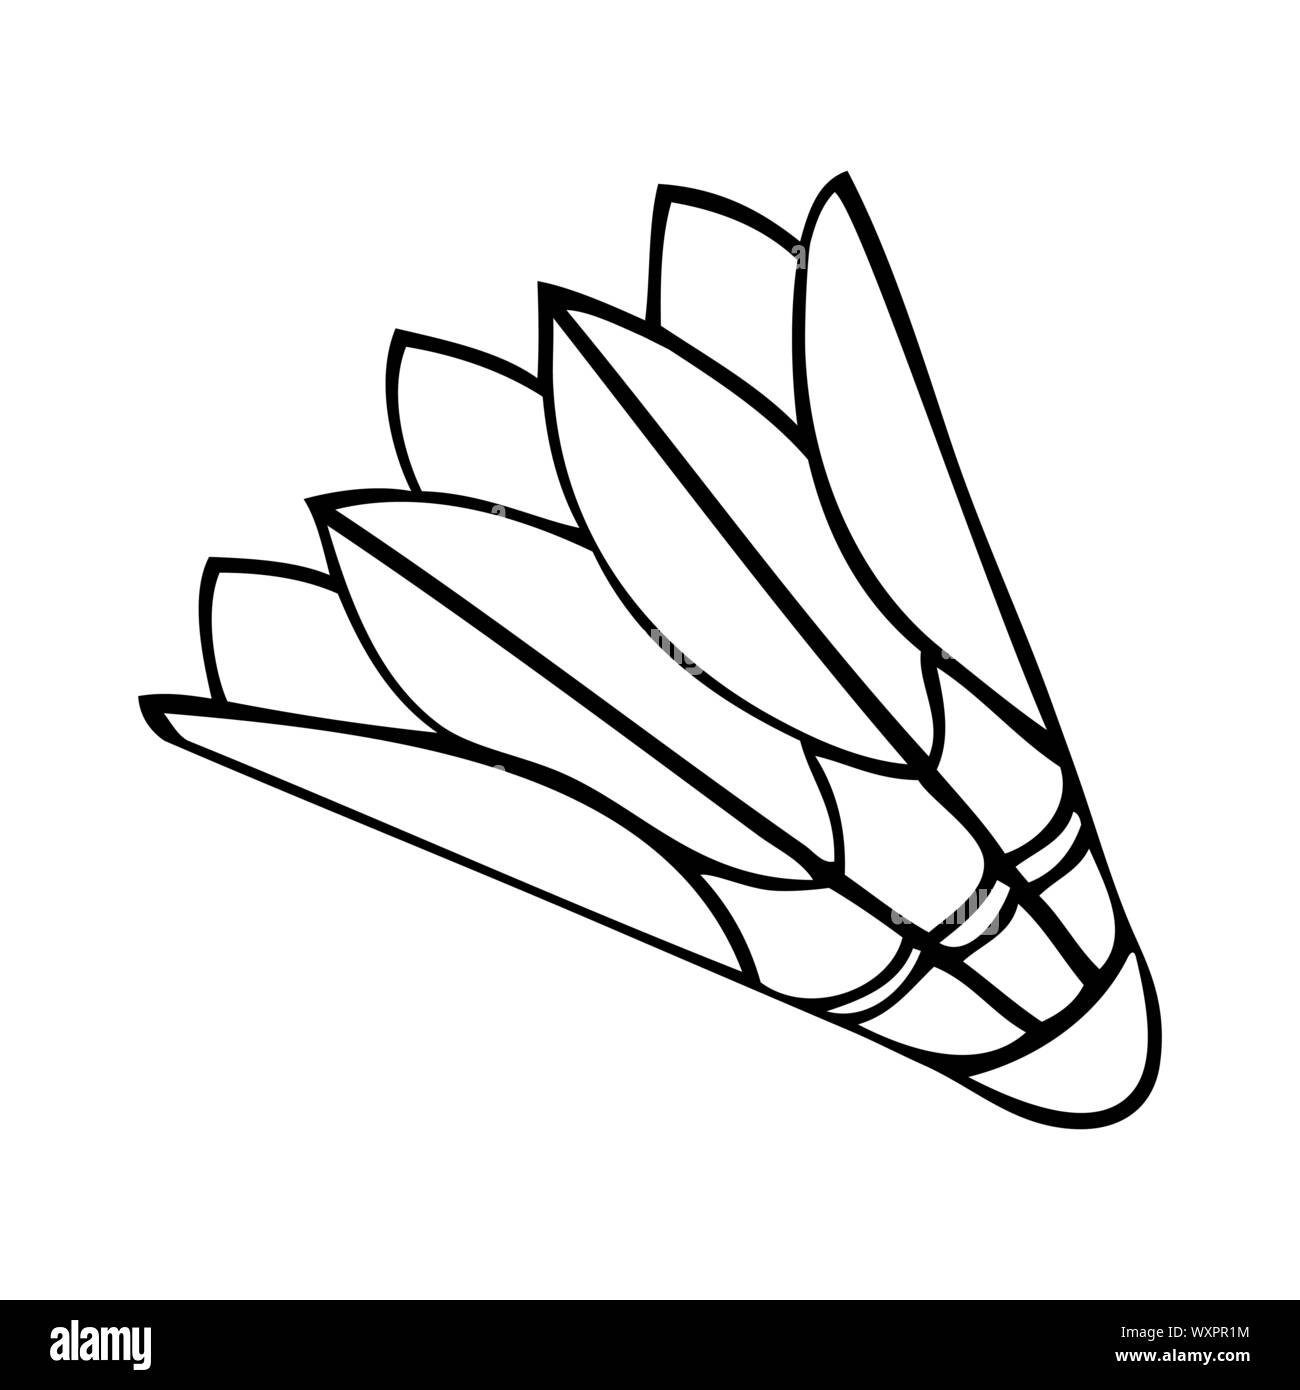 Black and white vector image of a badminton birdie Stock Vector